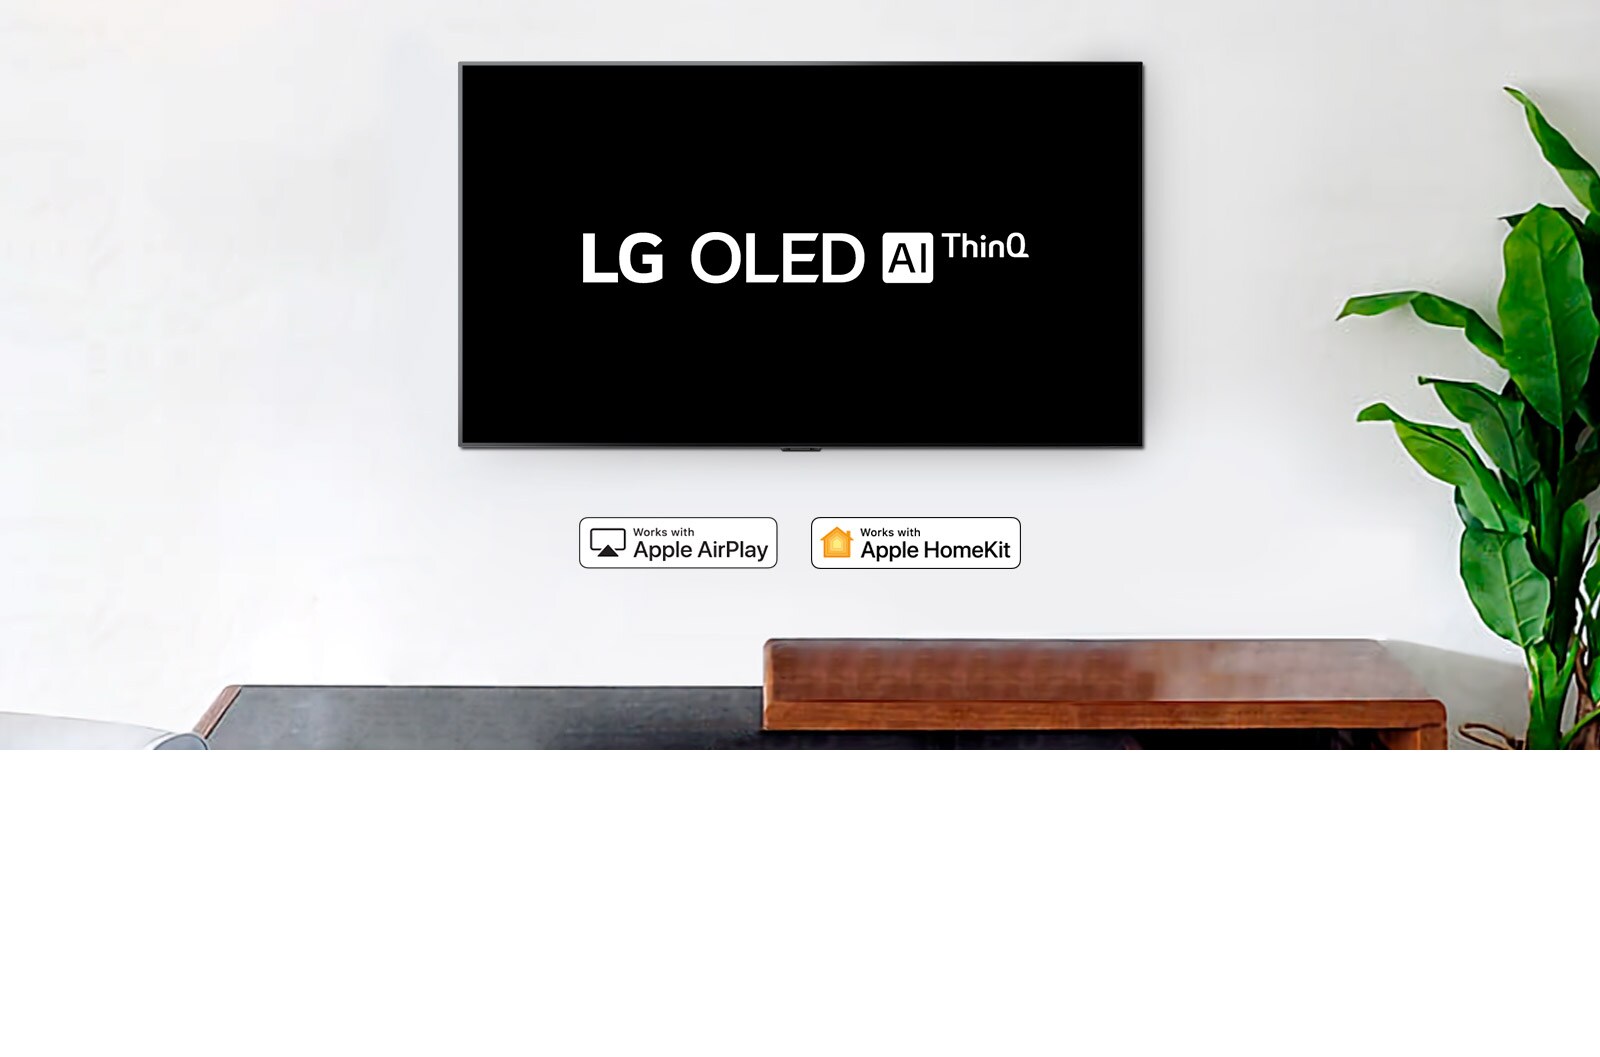 Wall-mounted TV showing LG OLED AI ThinQ logo on black background